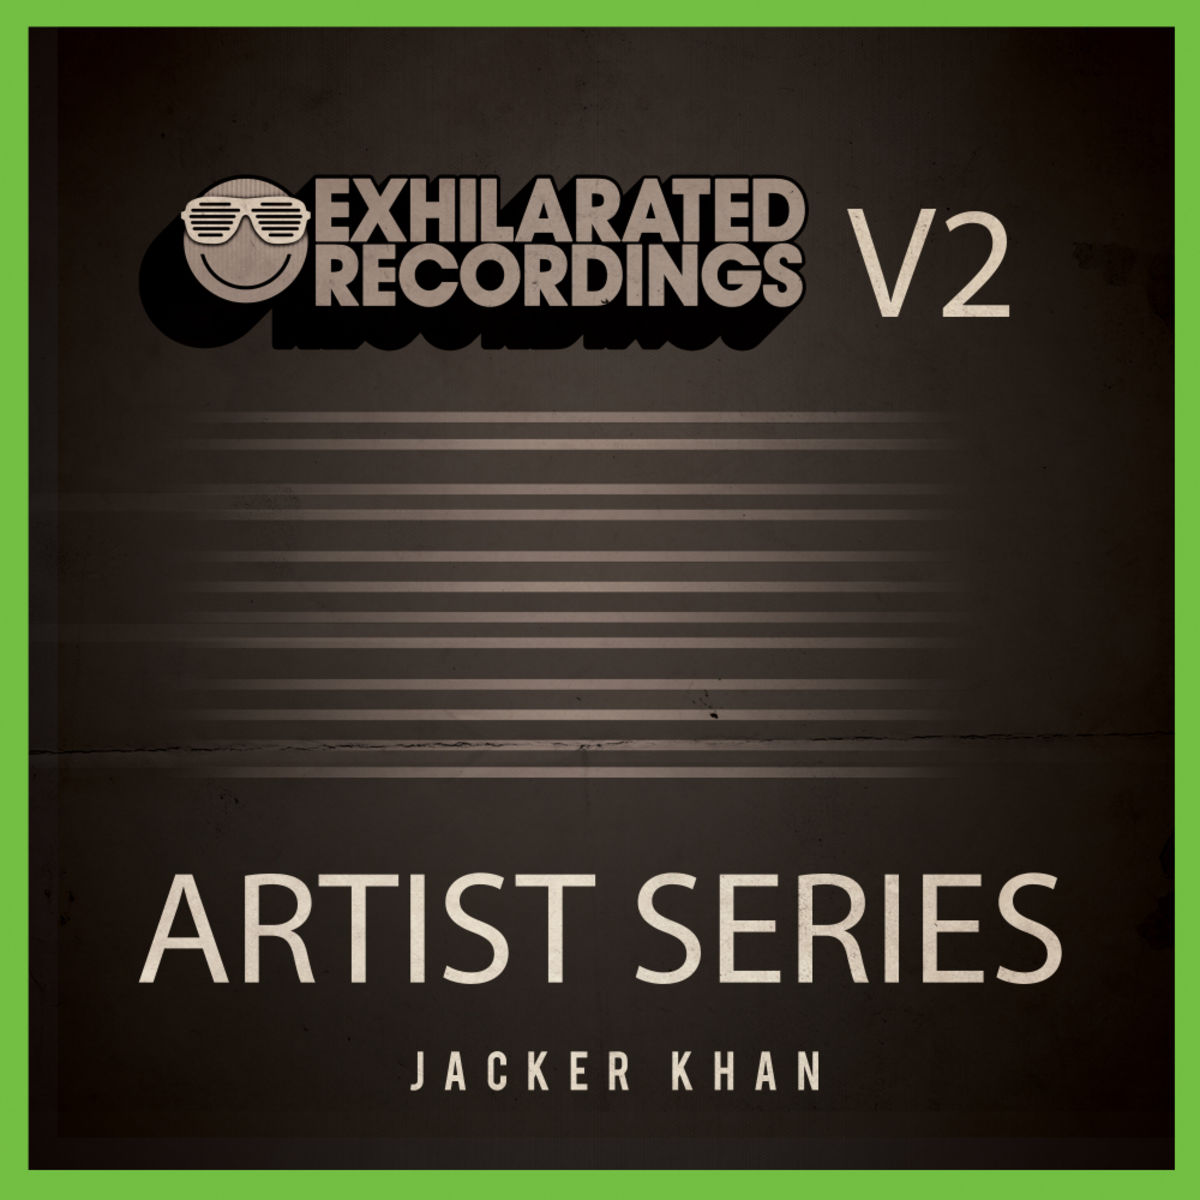 Jacker Khan - Exhilarated Recordings Artist Series, Vol. 2: Jacker Khan / Exhilarated Recordings